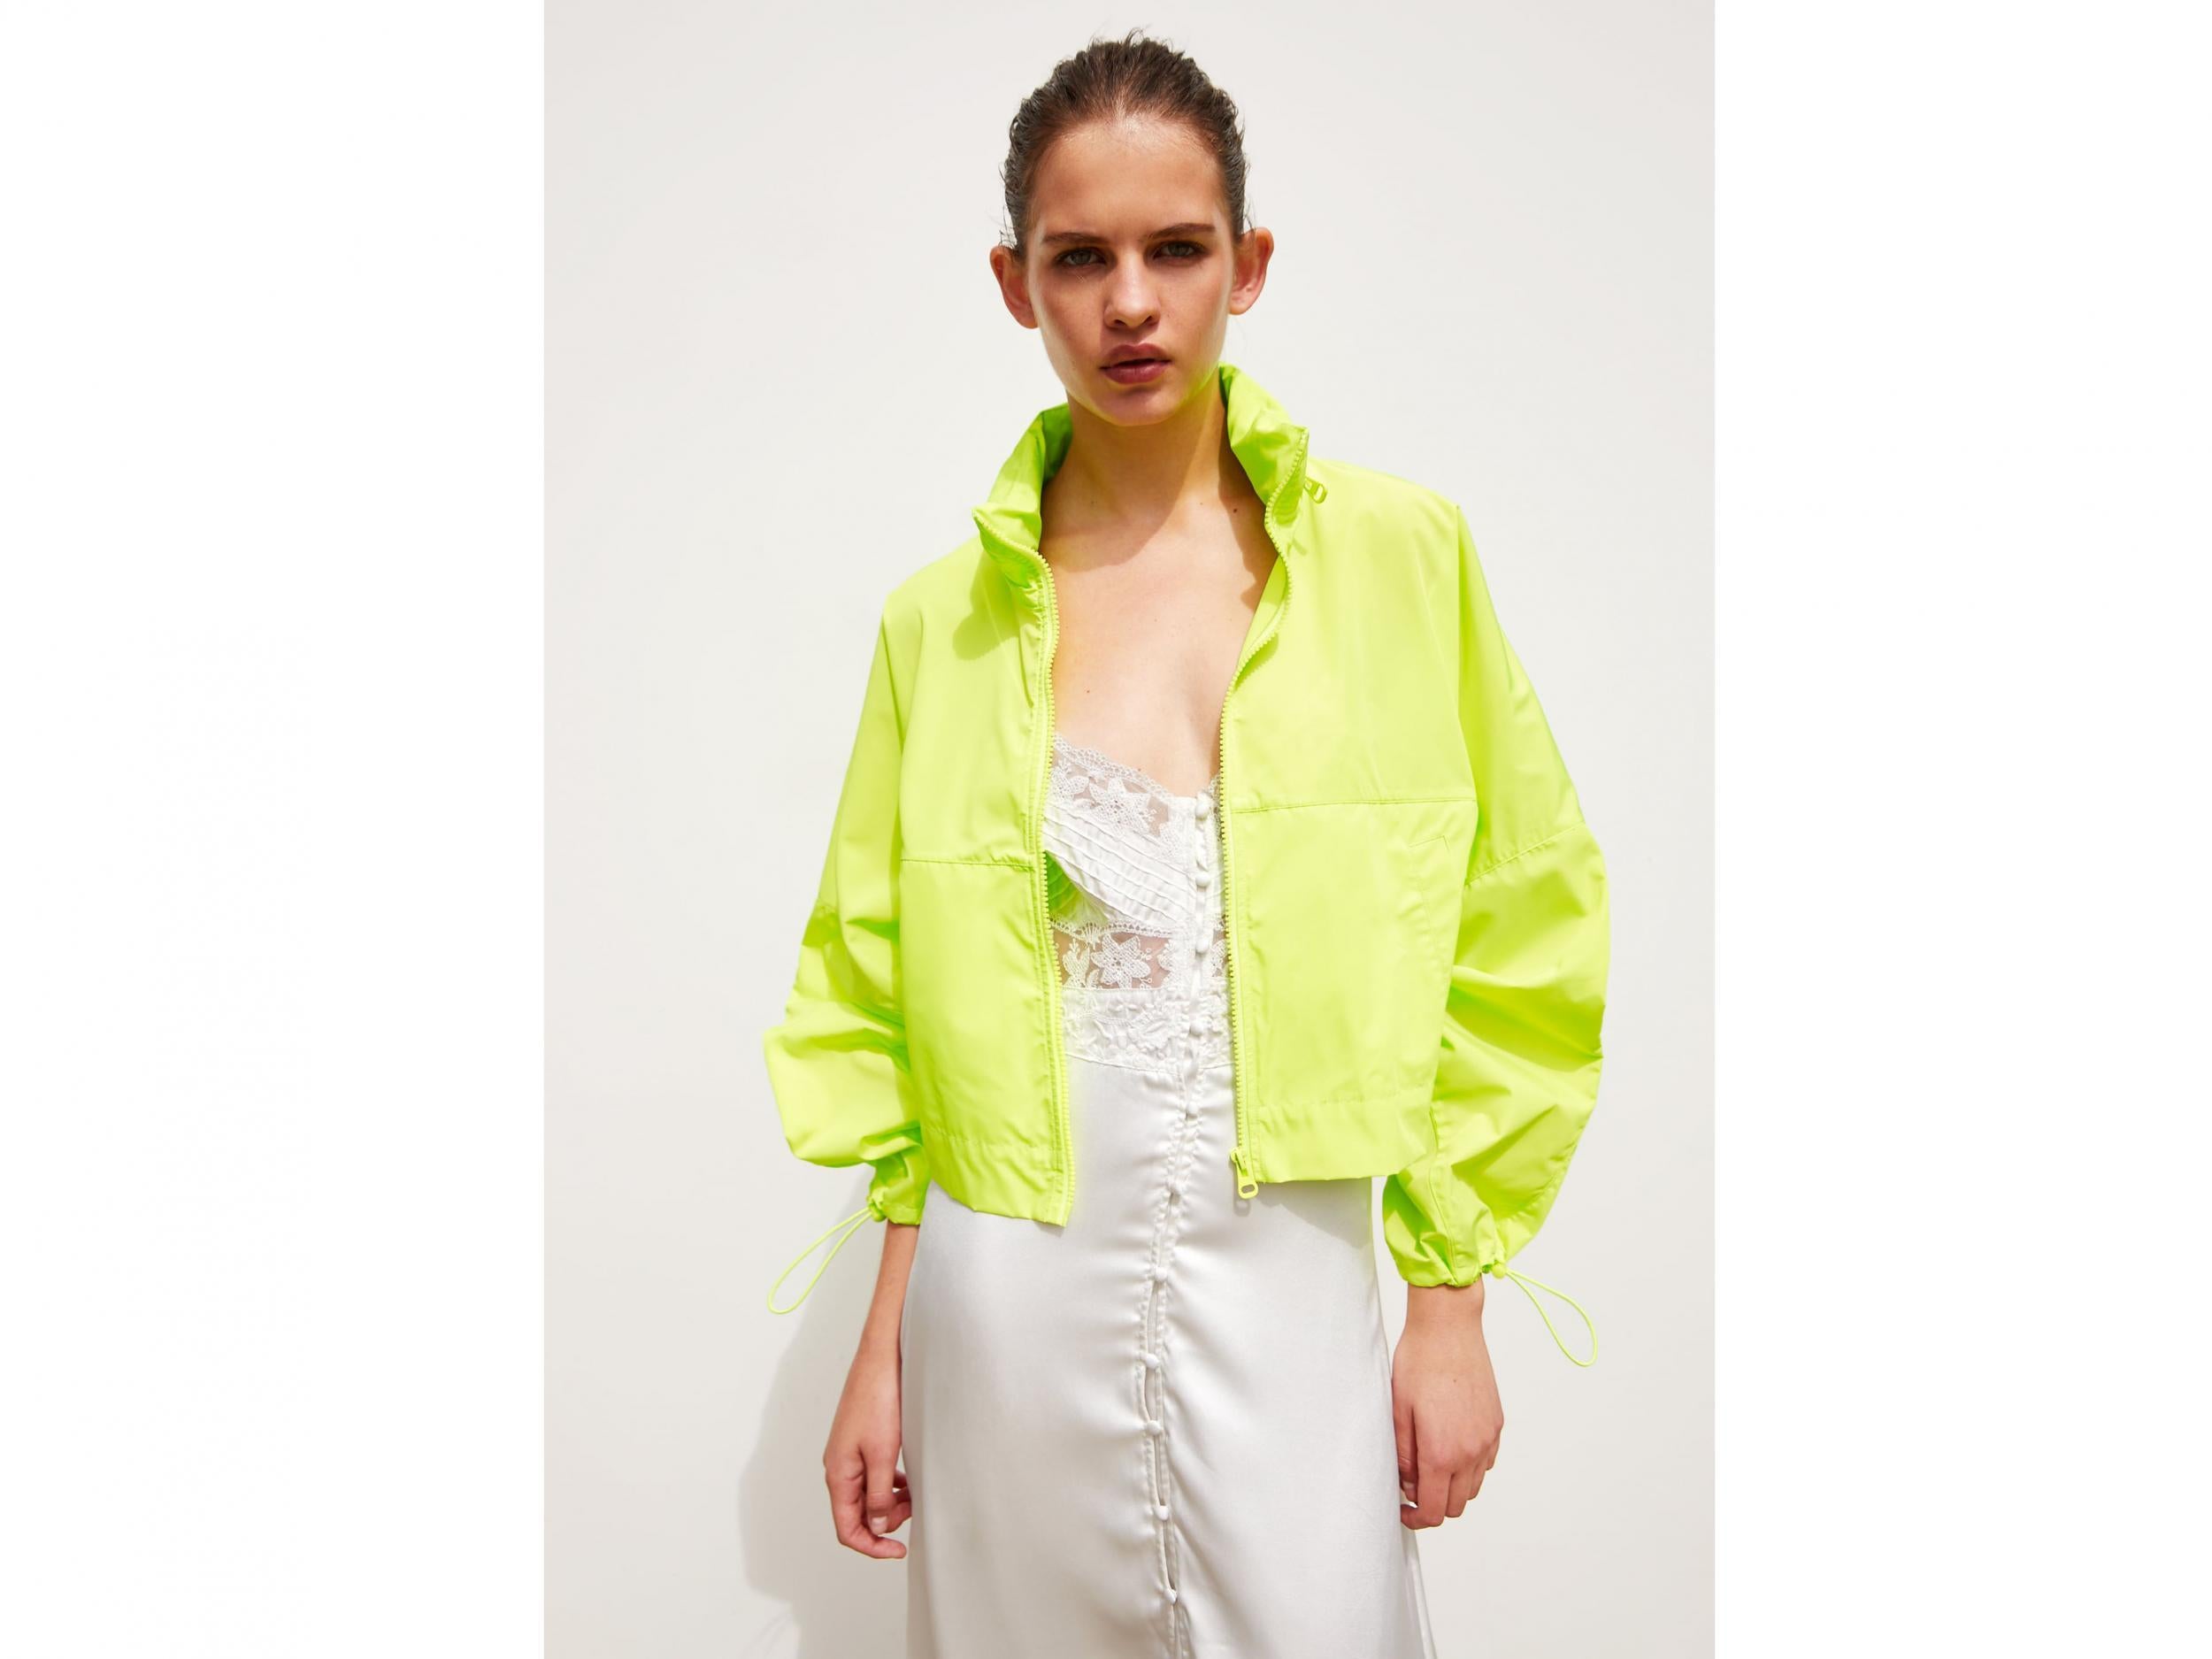 Zicac Transparent Raincoat Waterproof Lightweight Rain Jacket Reuseable Mac Showerproof Hooded Outerwear Travel Portable Packaway Womens Girls Fashion Rainwear 